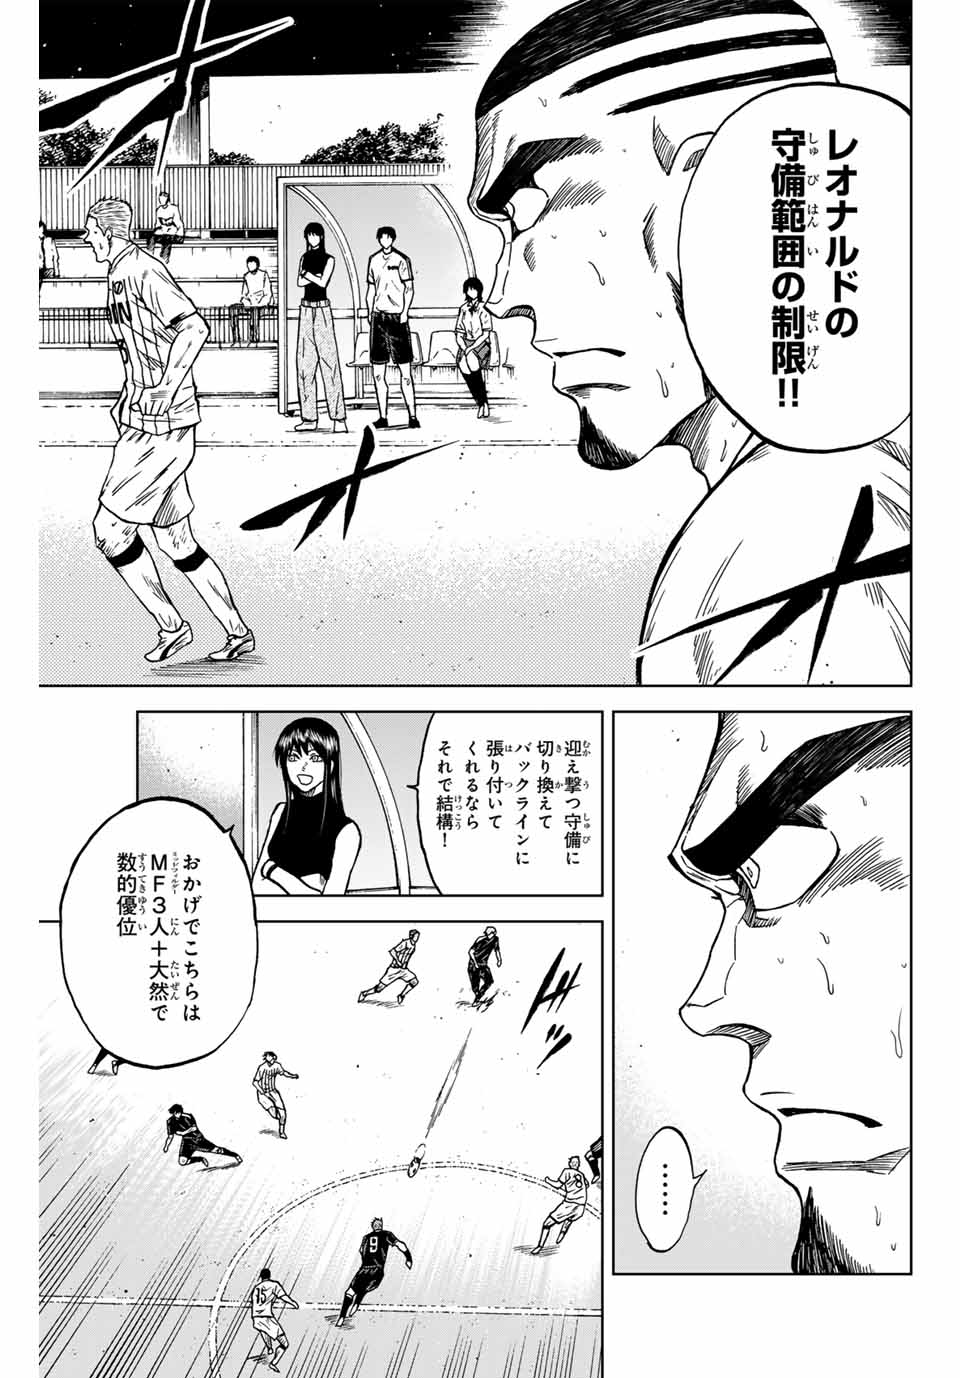 Aoku Somero - Chapter 97 - Page 9